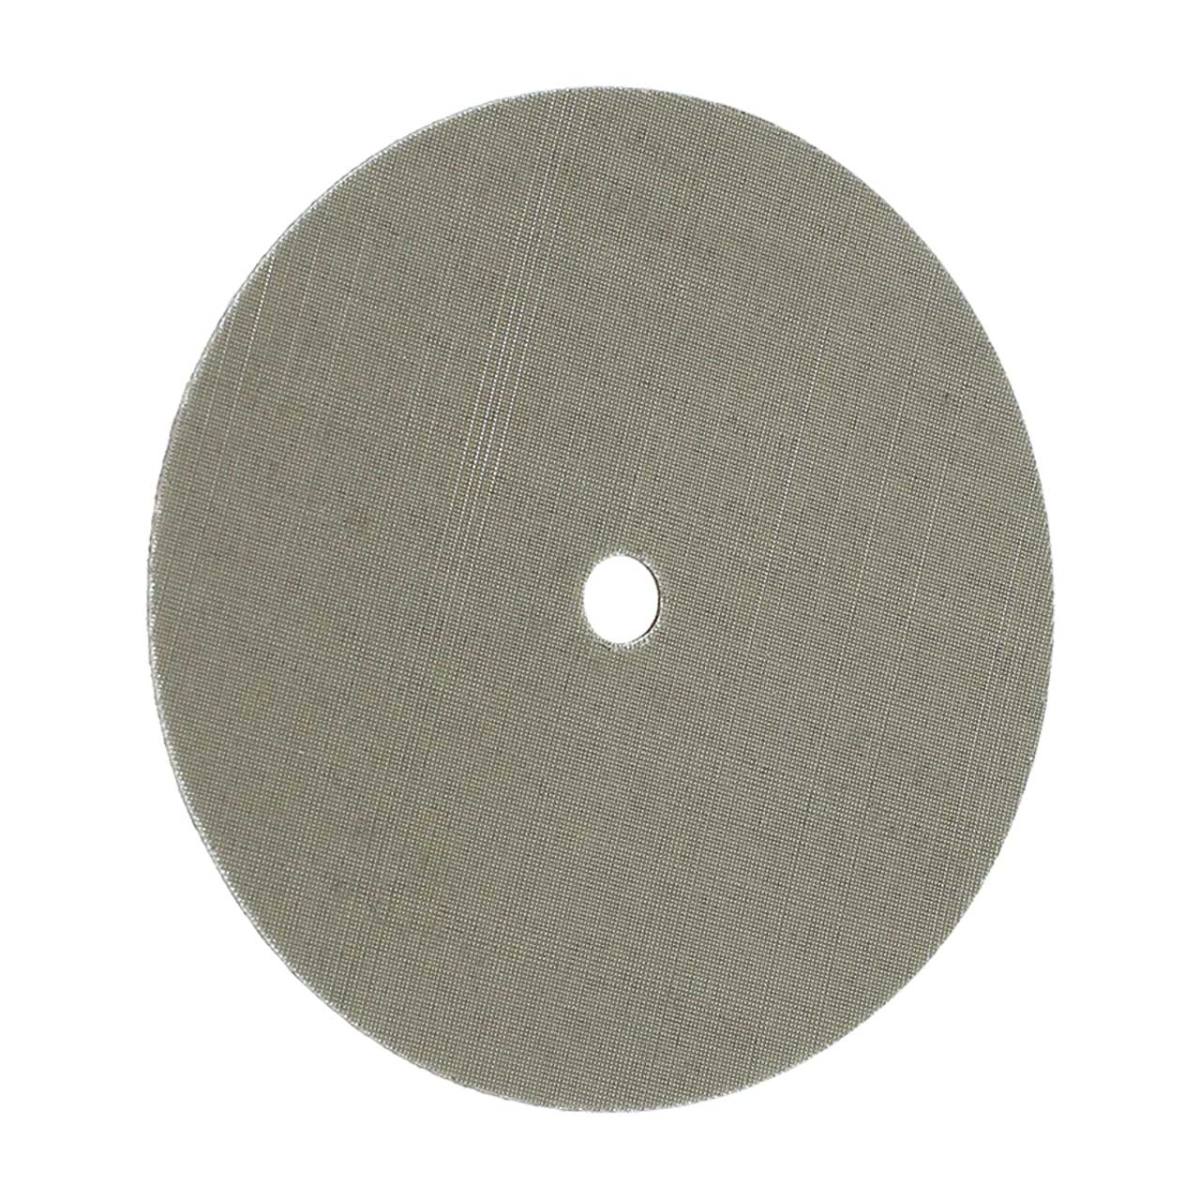 FIX KLETT Trizact disc, 150 mm x 10 mm, grain 120 / A 160, hook and loop